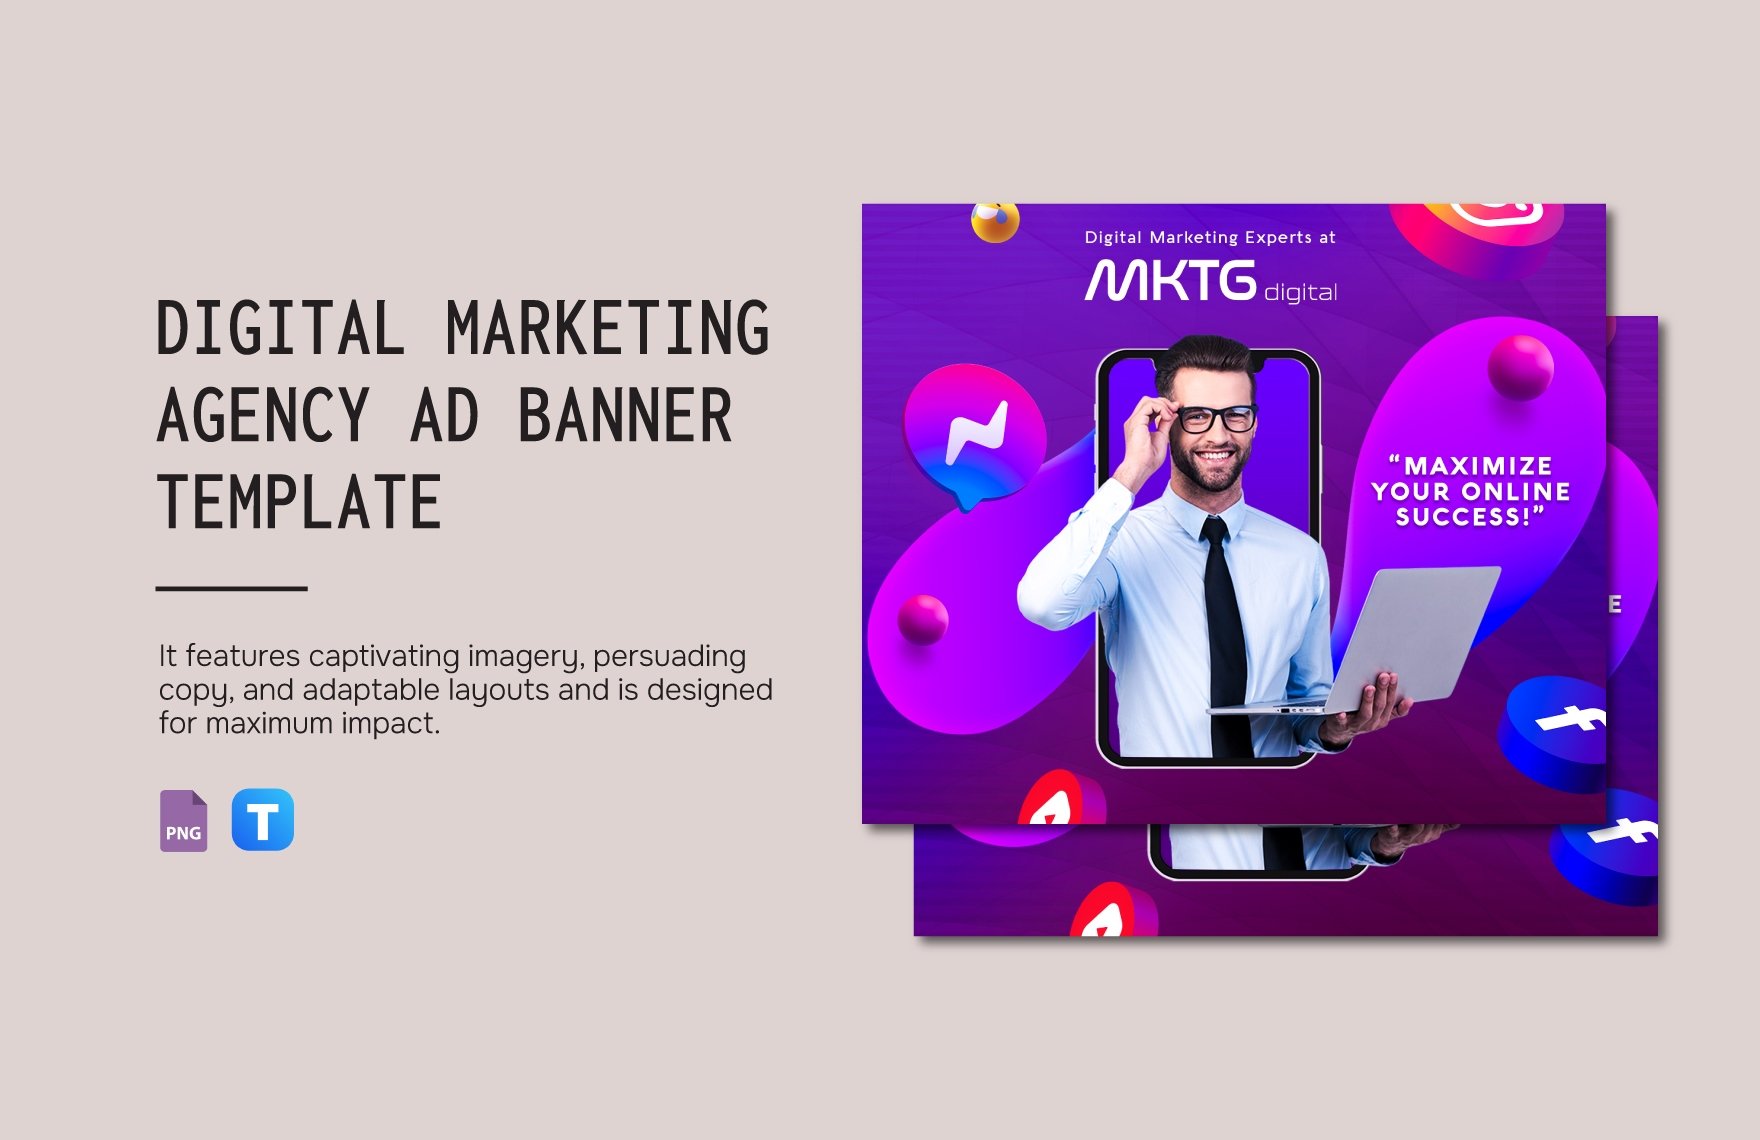 Digital Marketing Agency Ad Banner Template